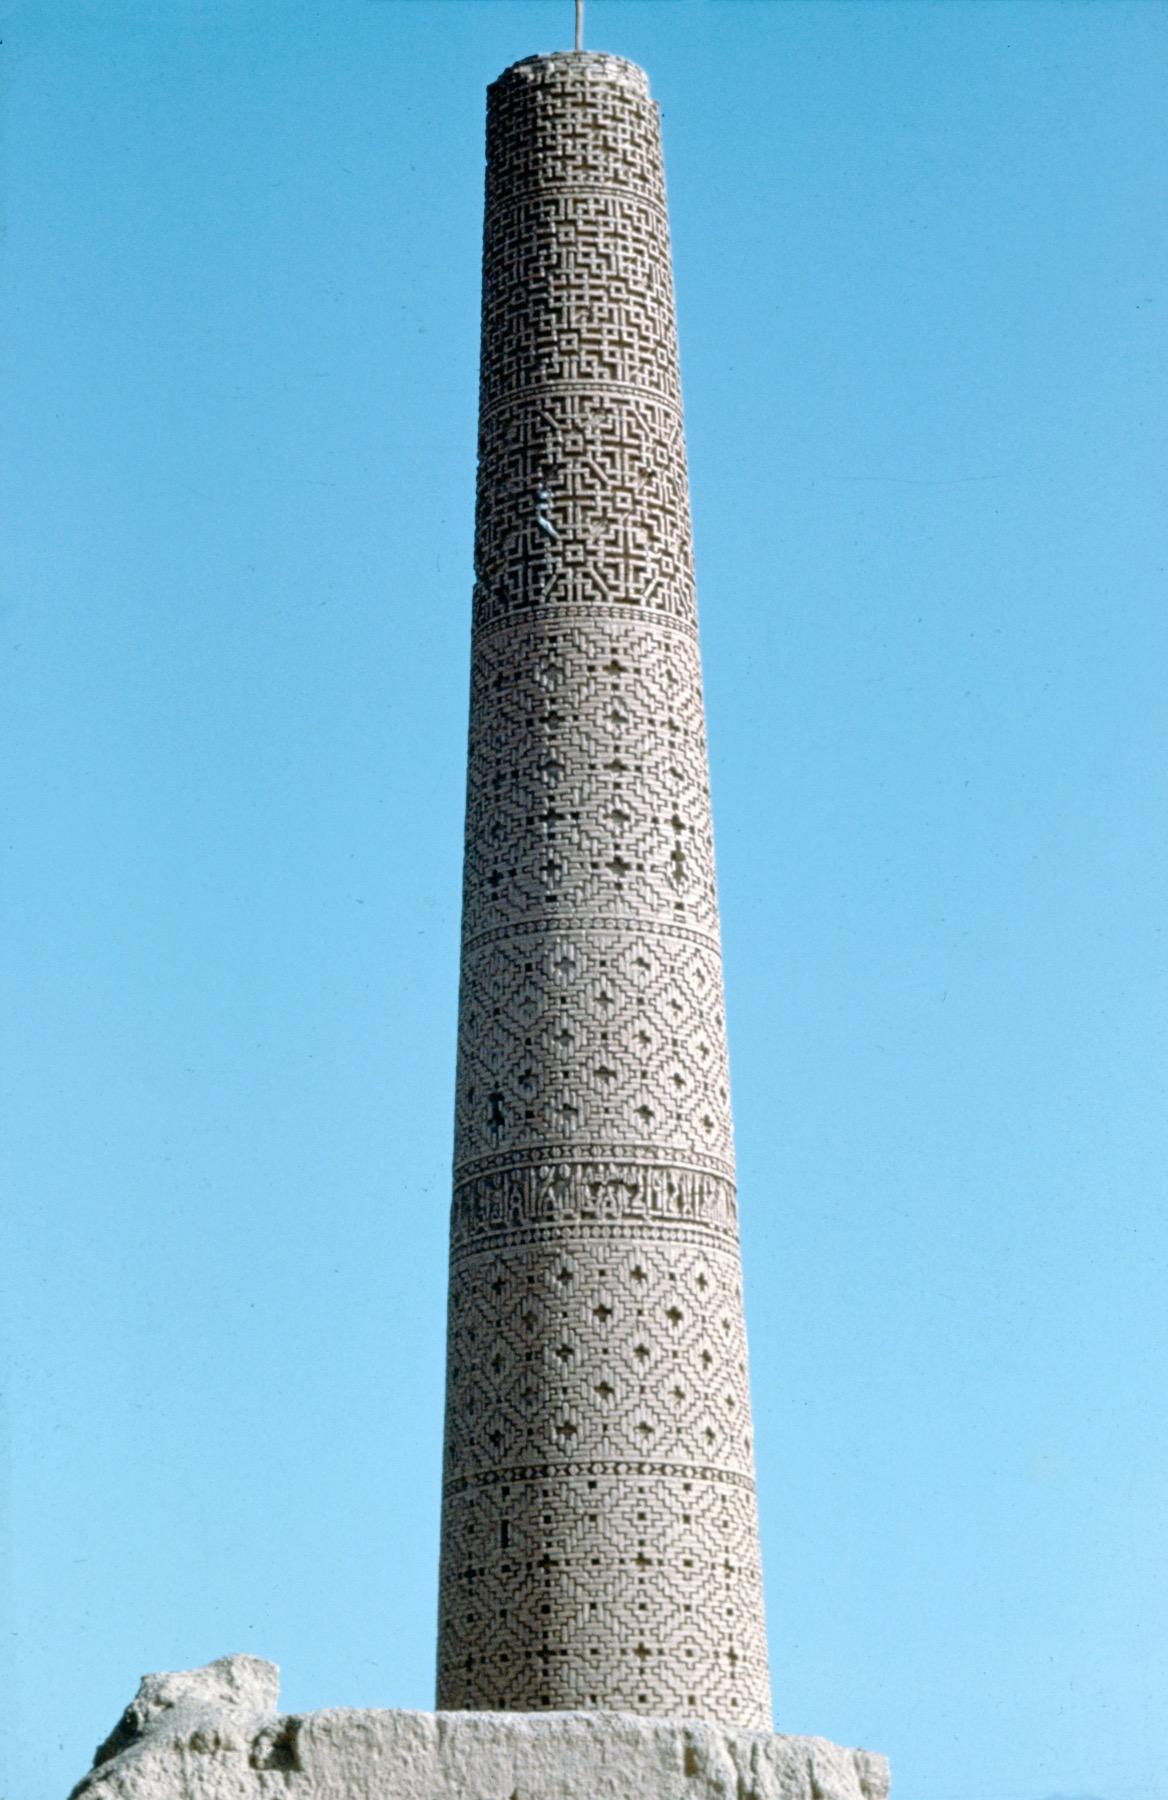 View of Seljuk minaret with decorative geometric brickwork